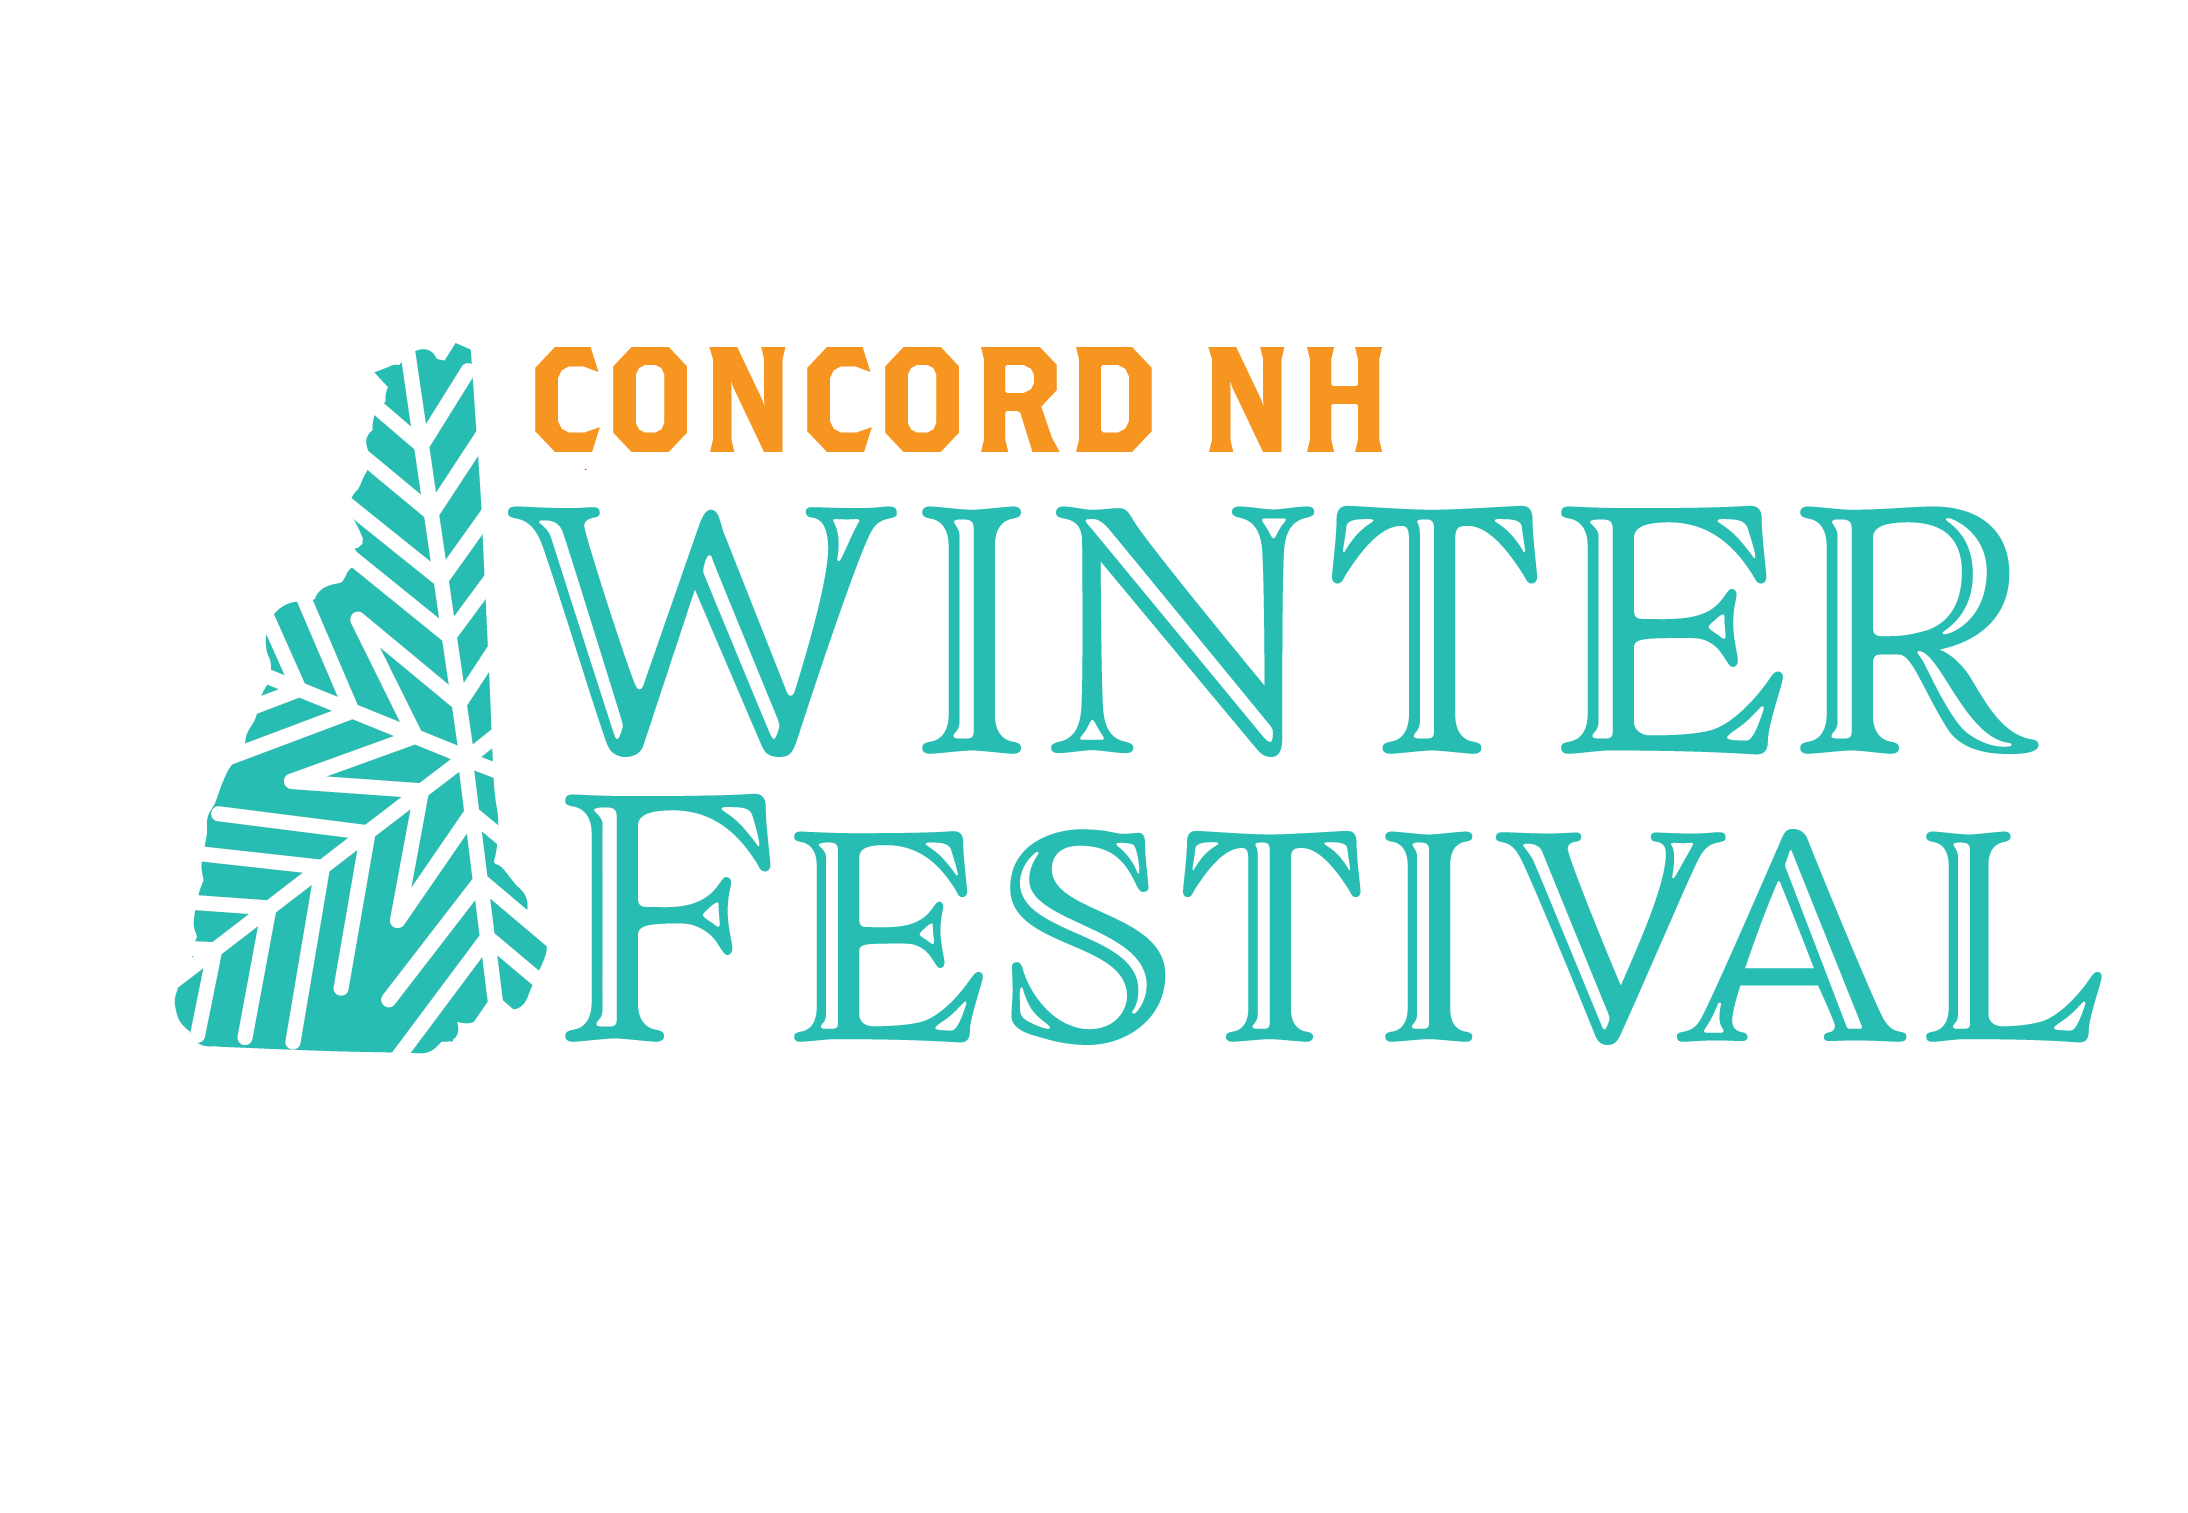 Concord NH Winter Festival Intown Concord